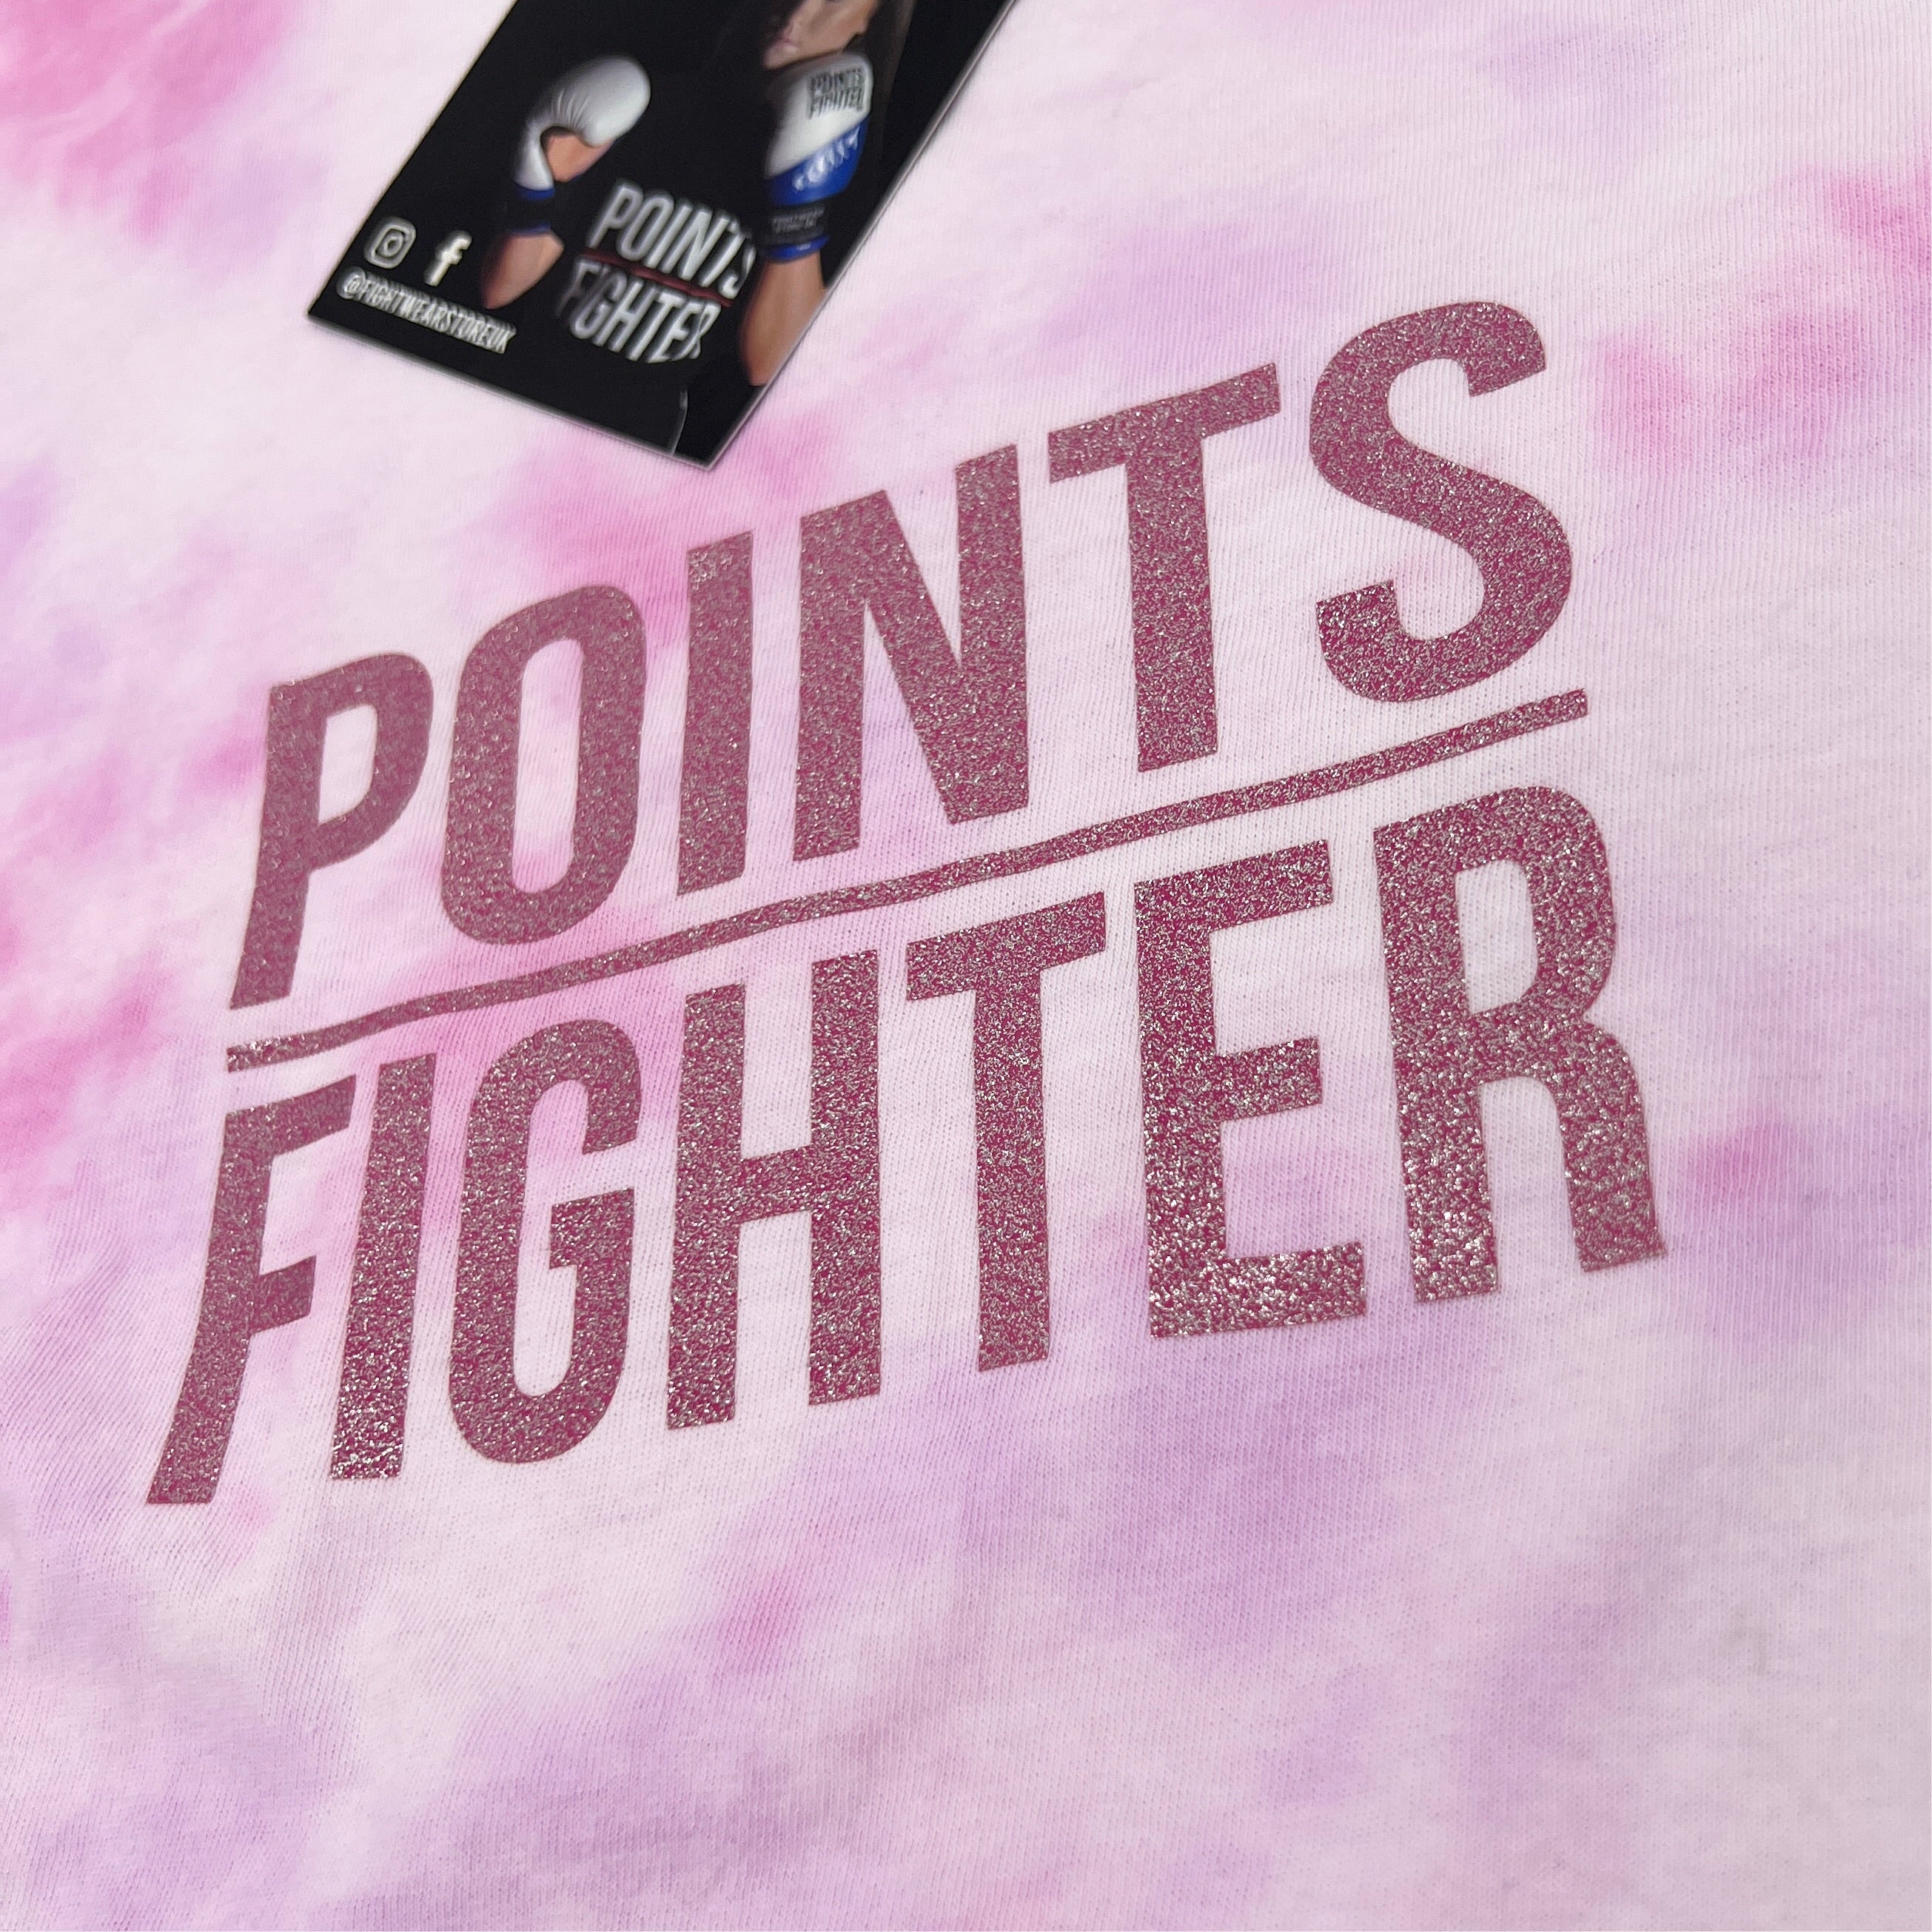 Points Fighter Tie Dye T-Shirt